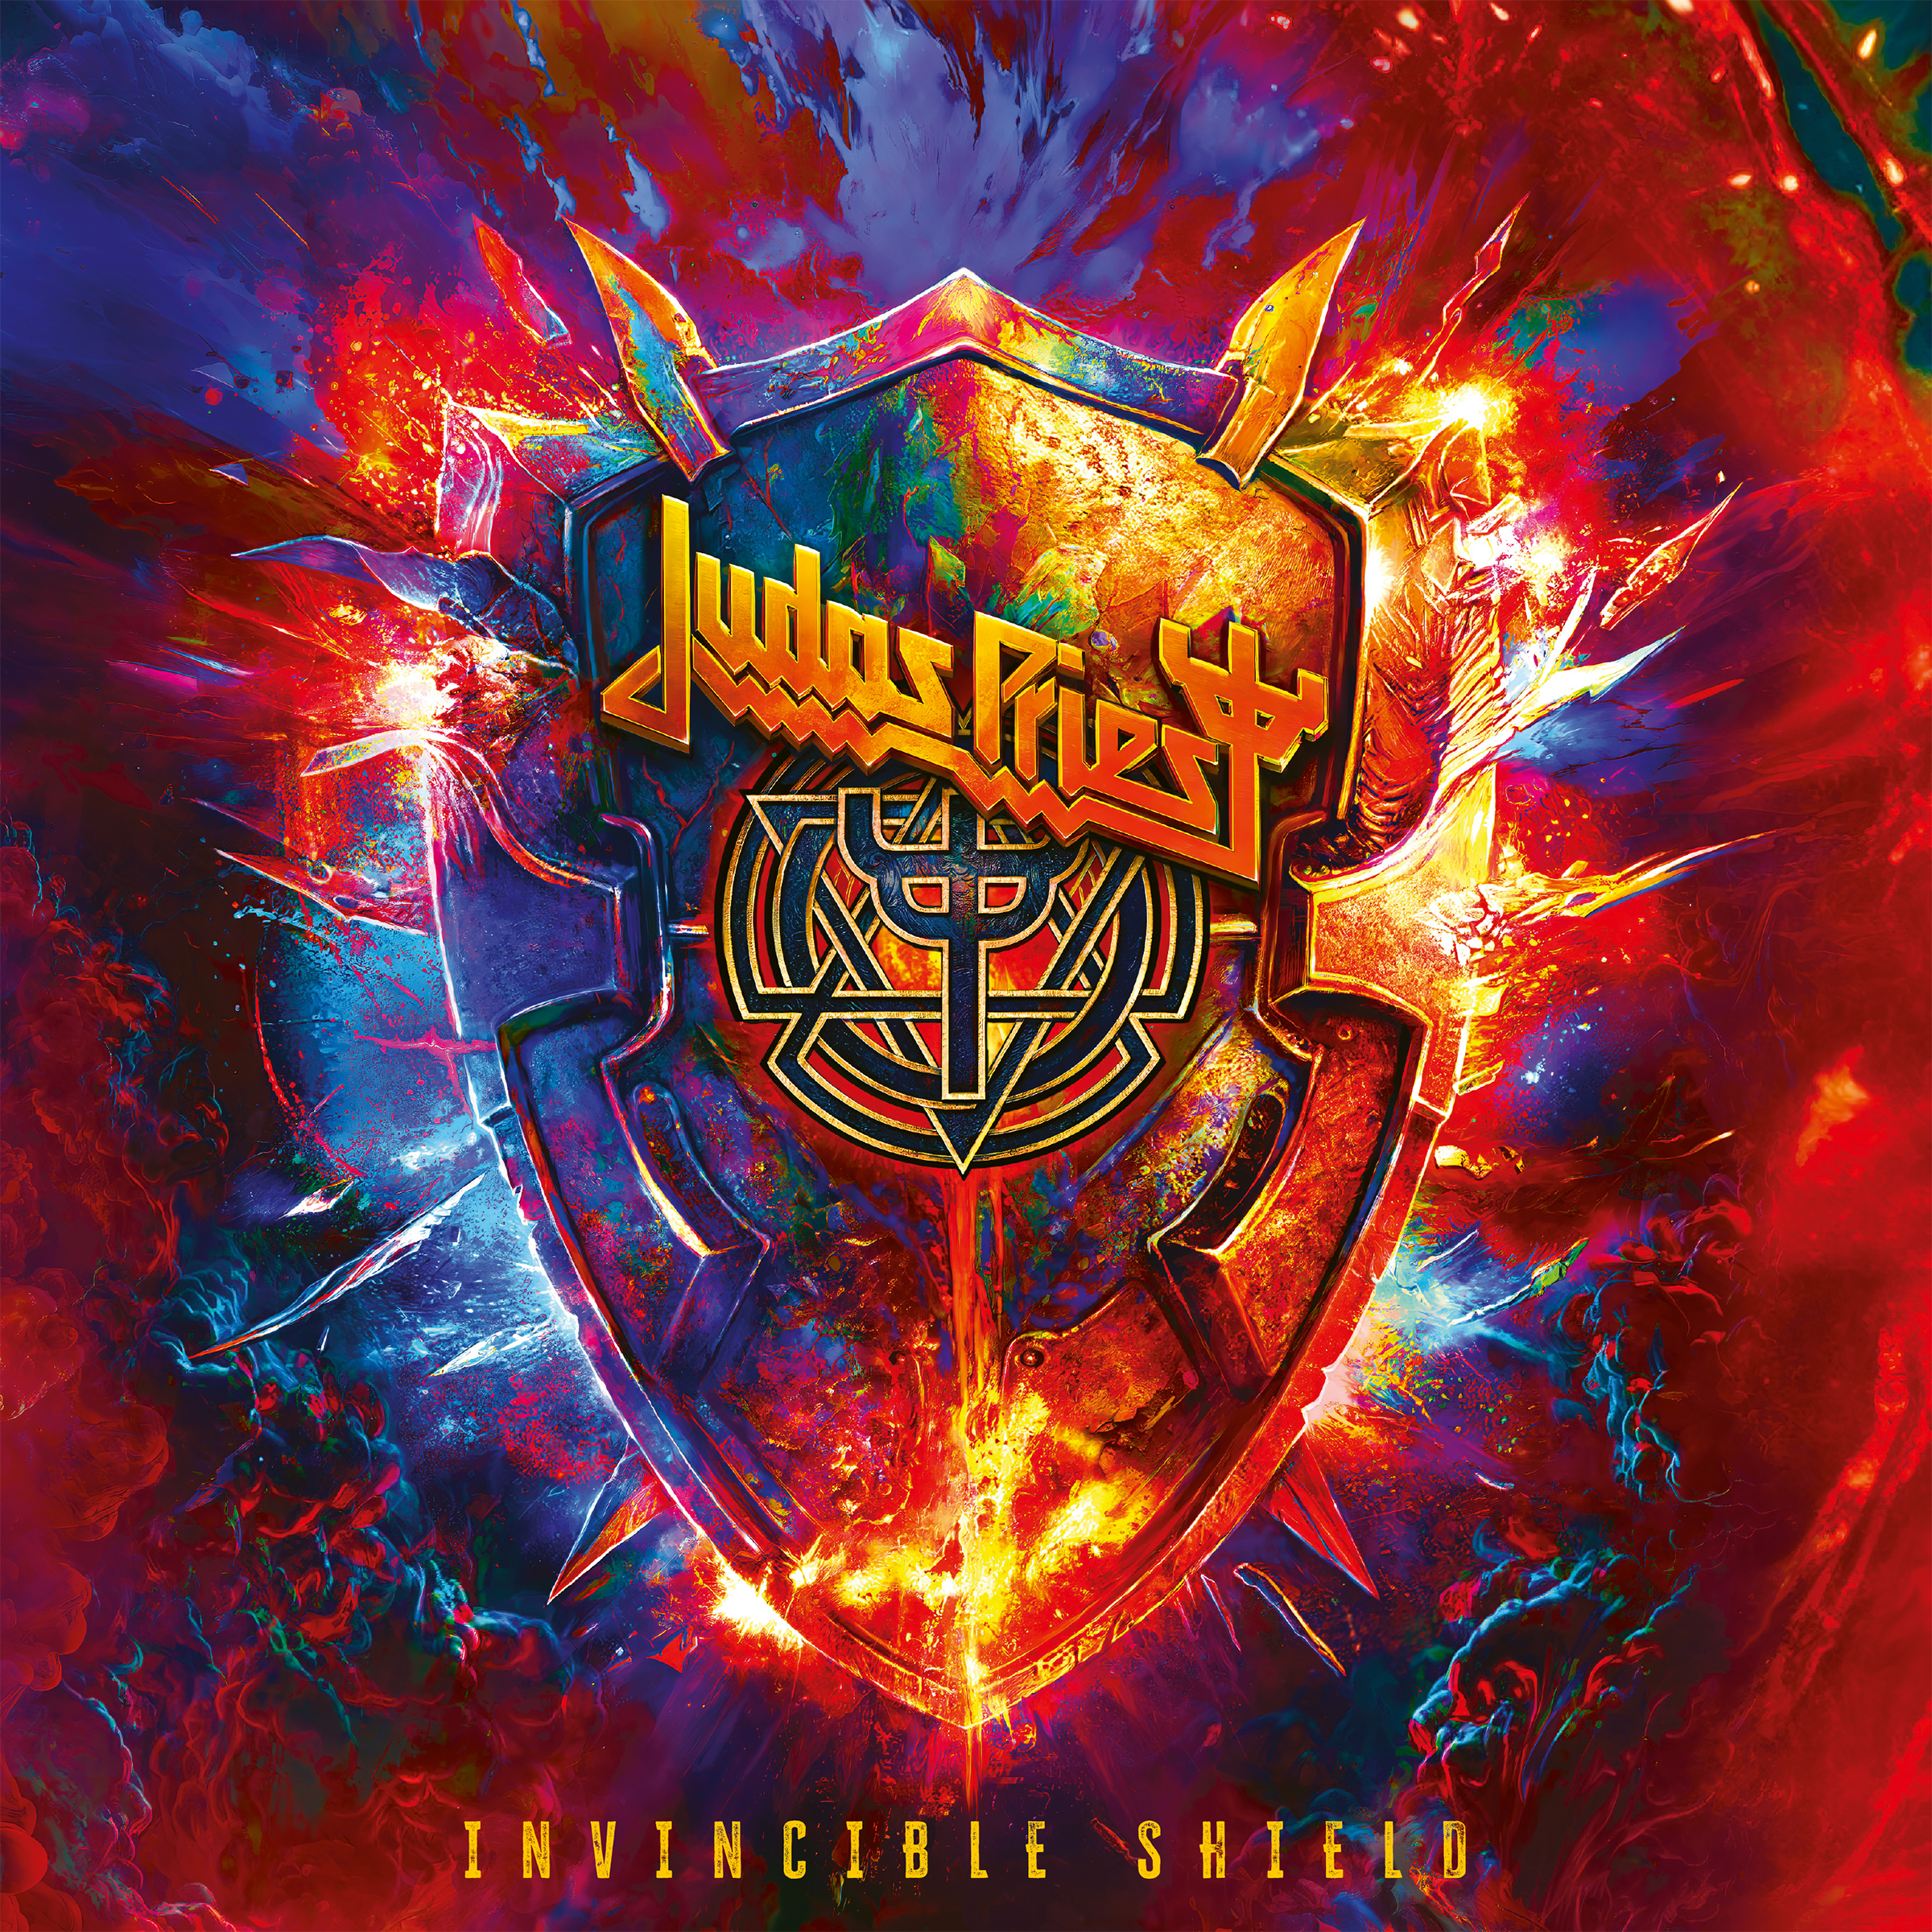 Judas Priest Invincible Shield cover artwork